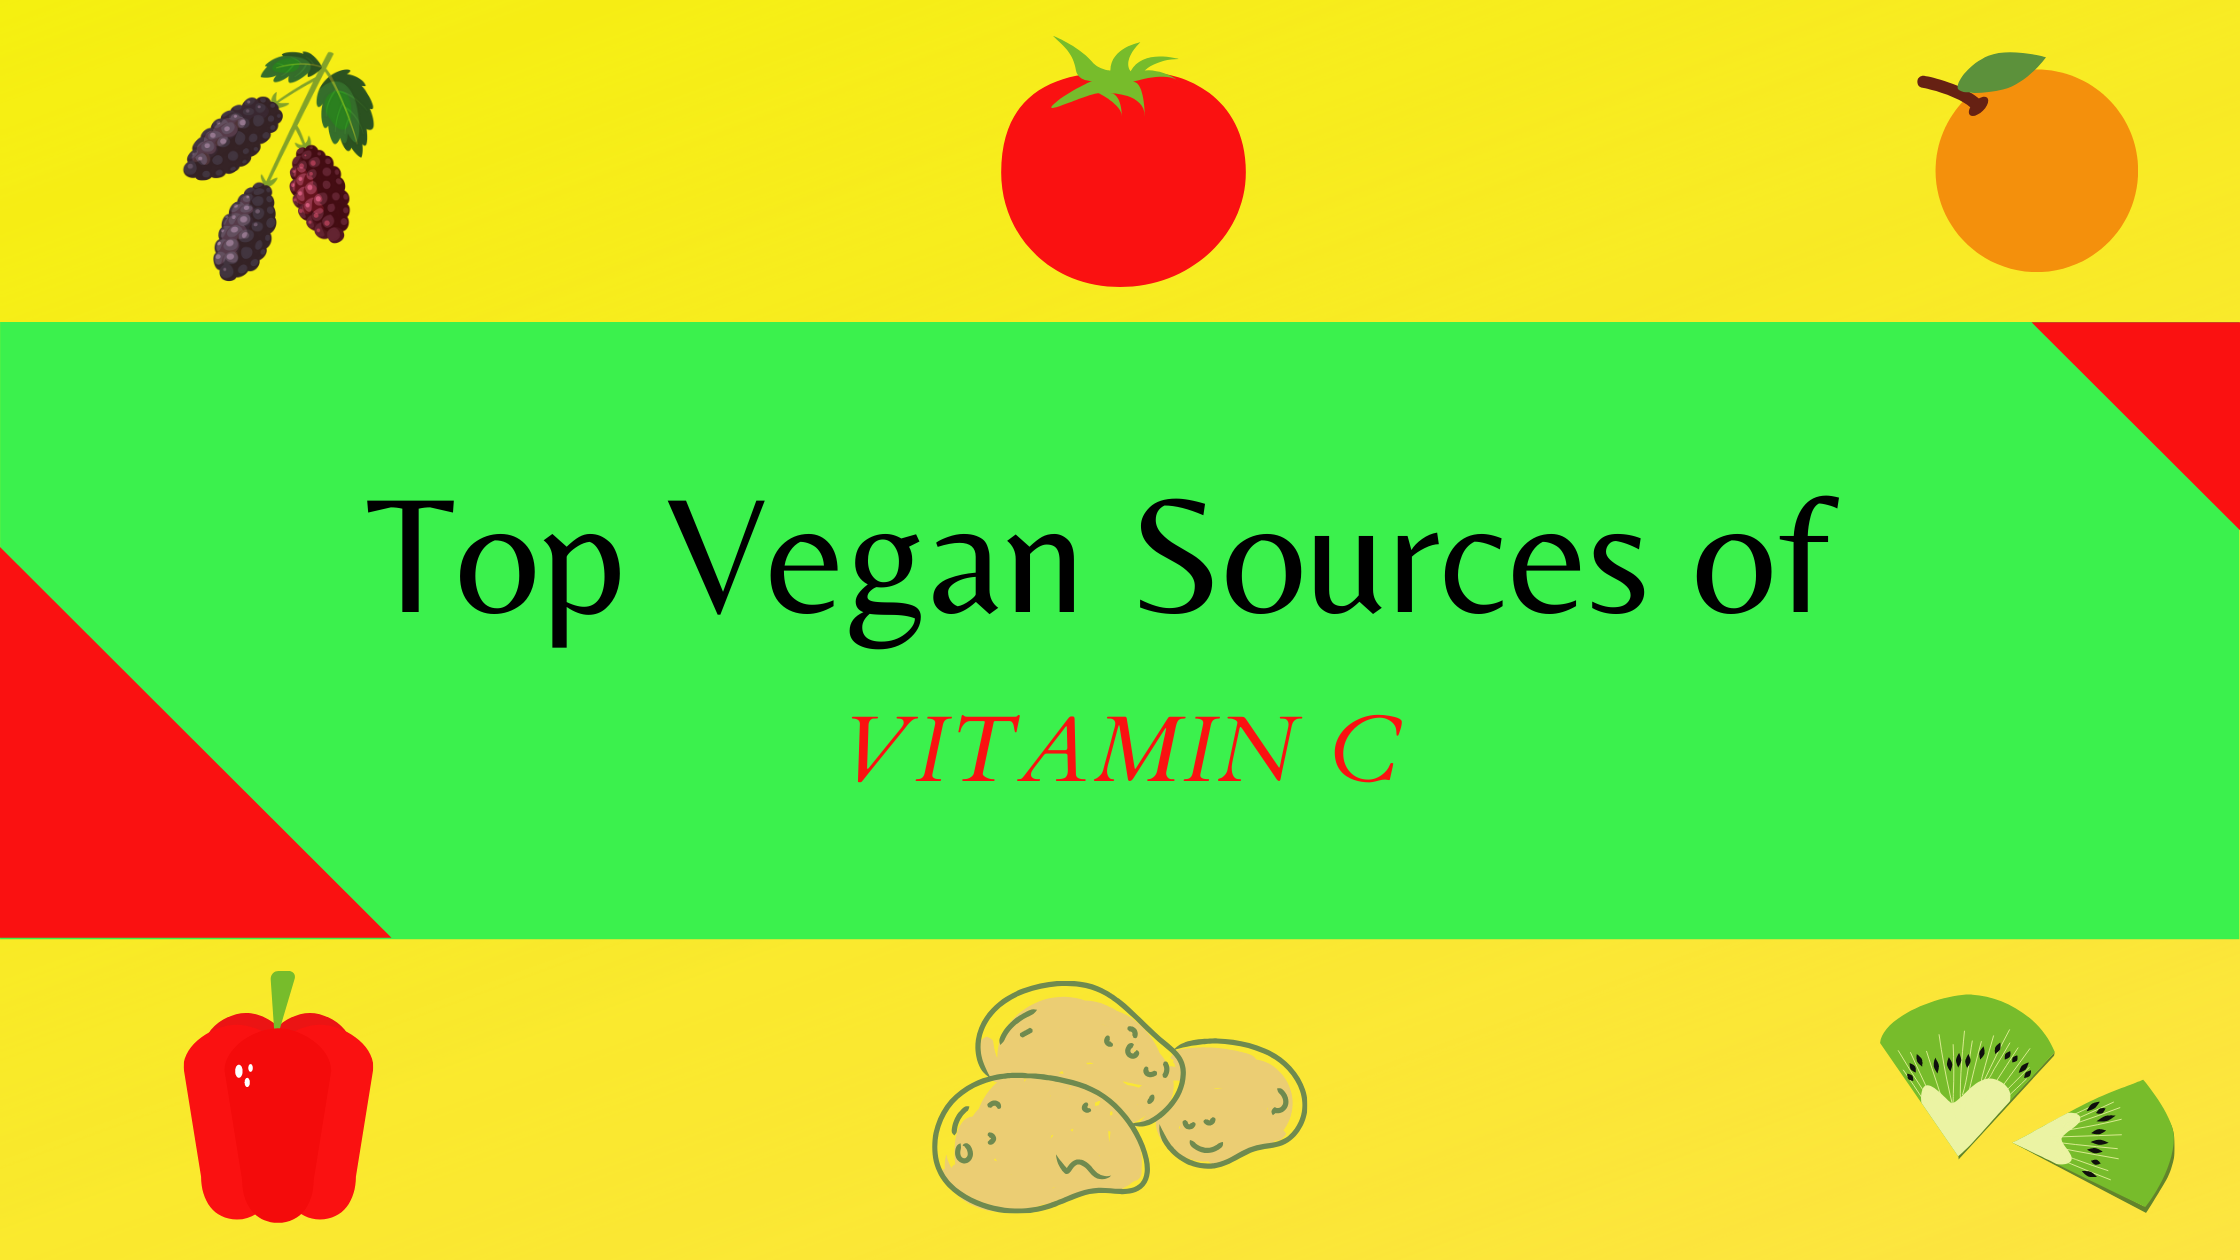 Vitamin C rich food sources